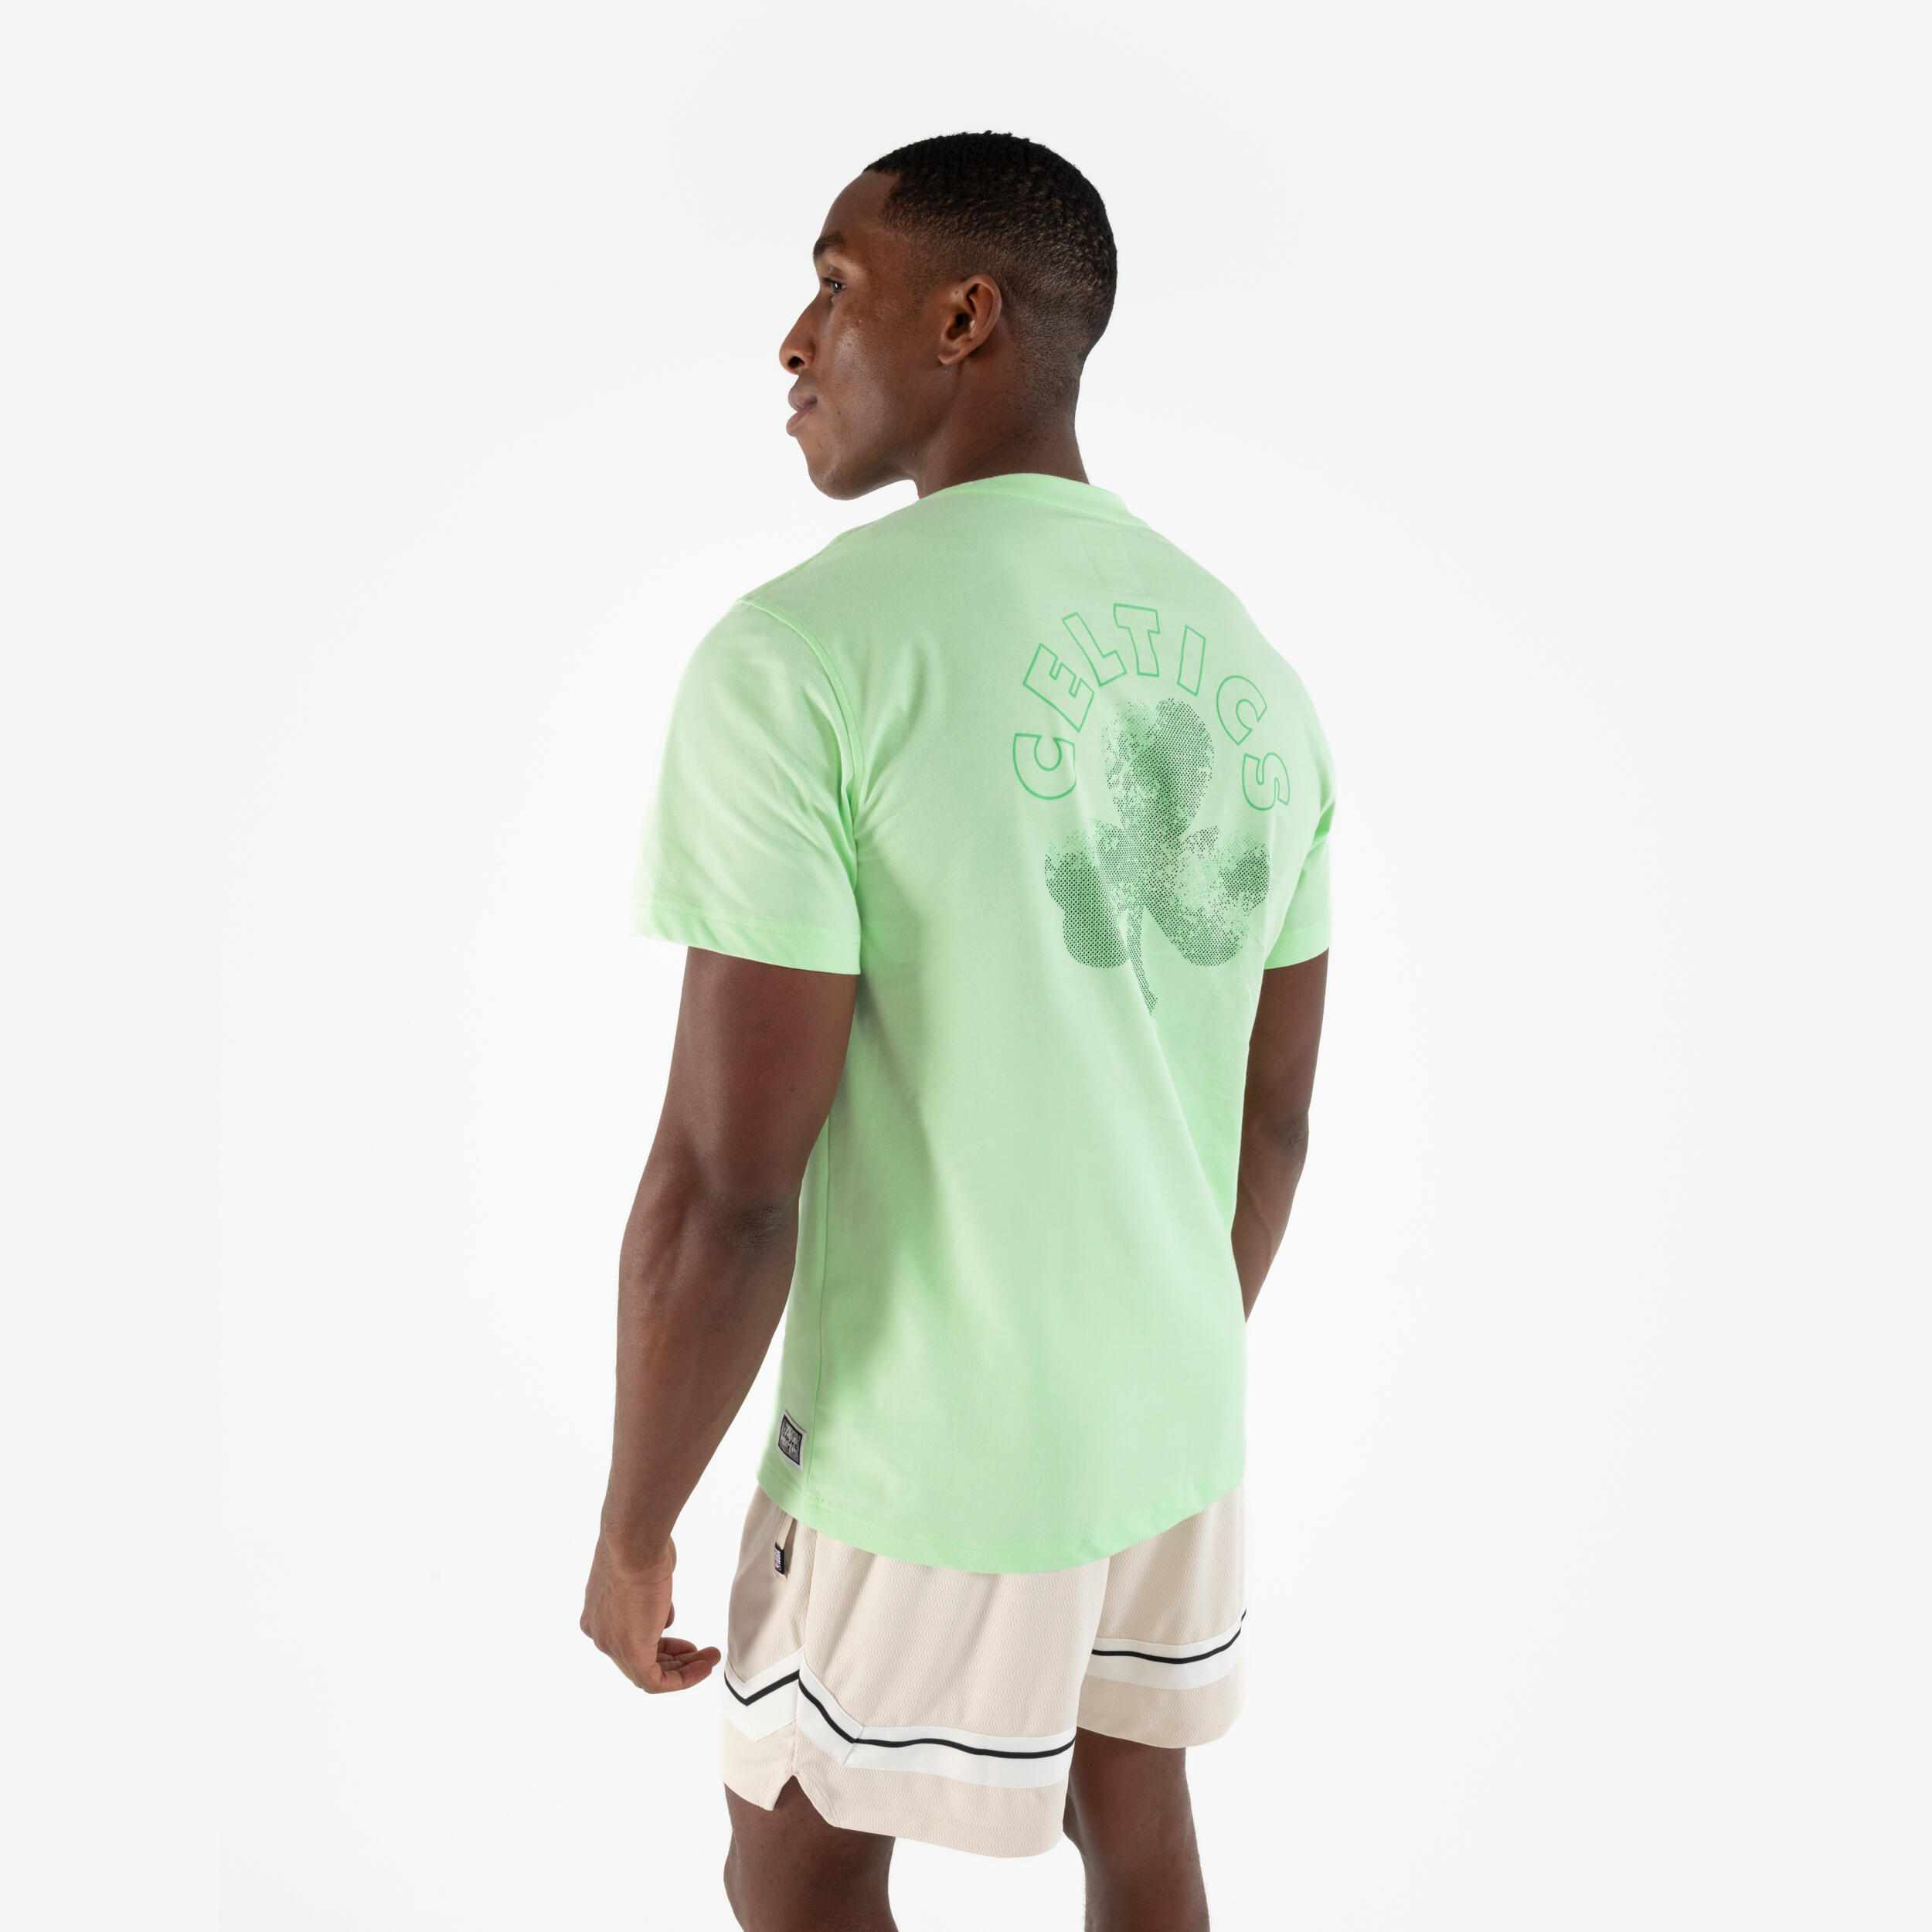 Unisex Basketball T-Shirt 900 AD - NBA Celtics/Green 6/8